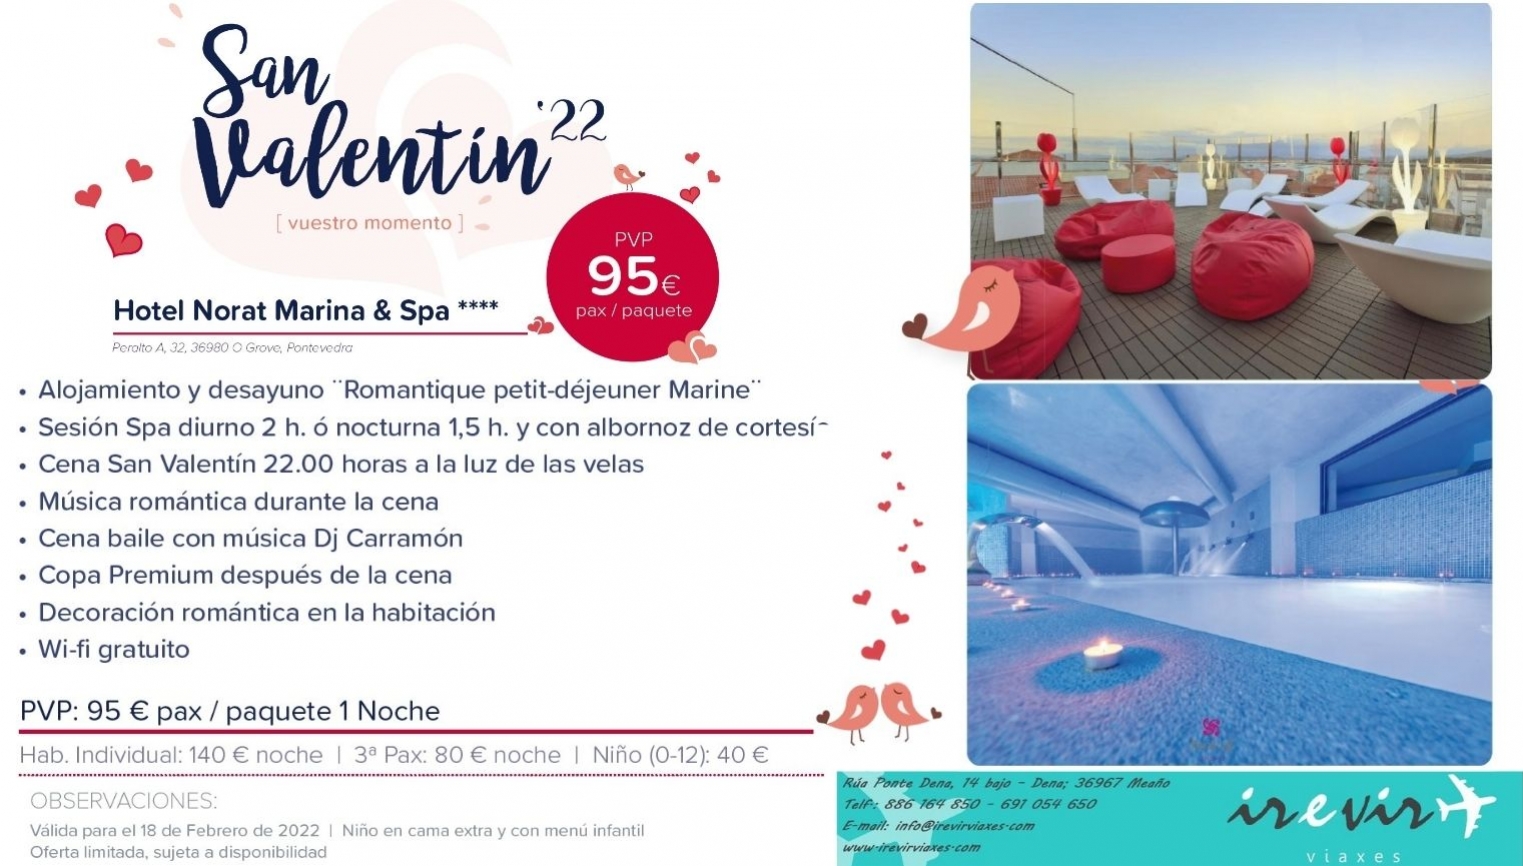 Hotel Norat Marina & Spa **** San Valentín 95€ pax - foto 1/1